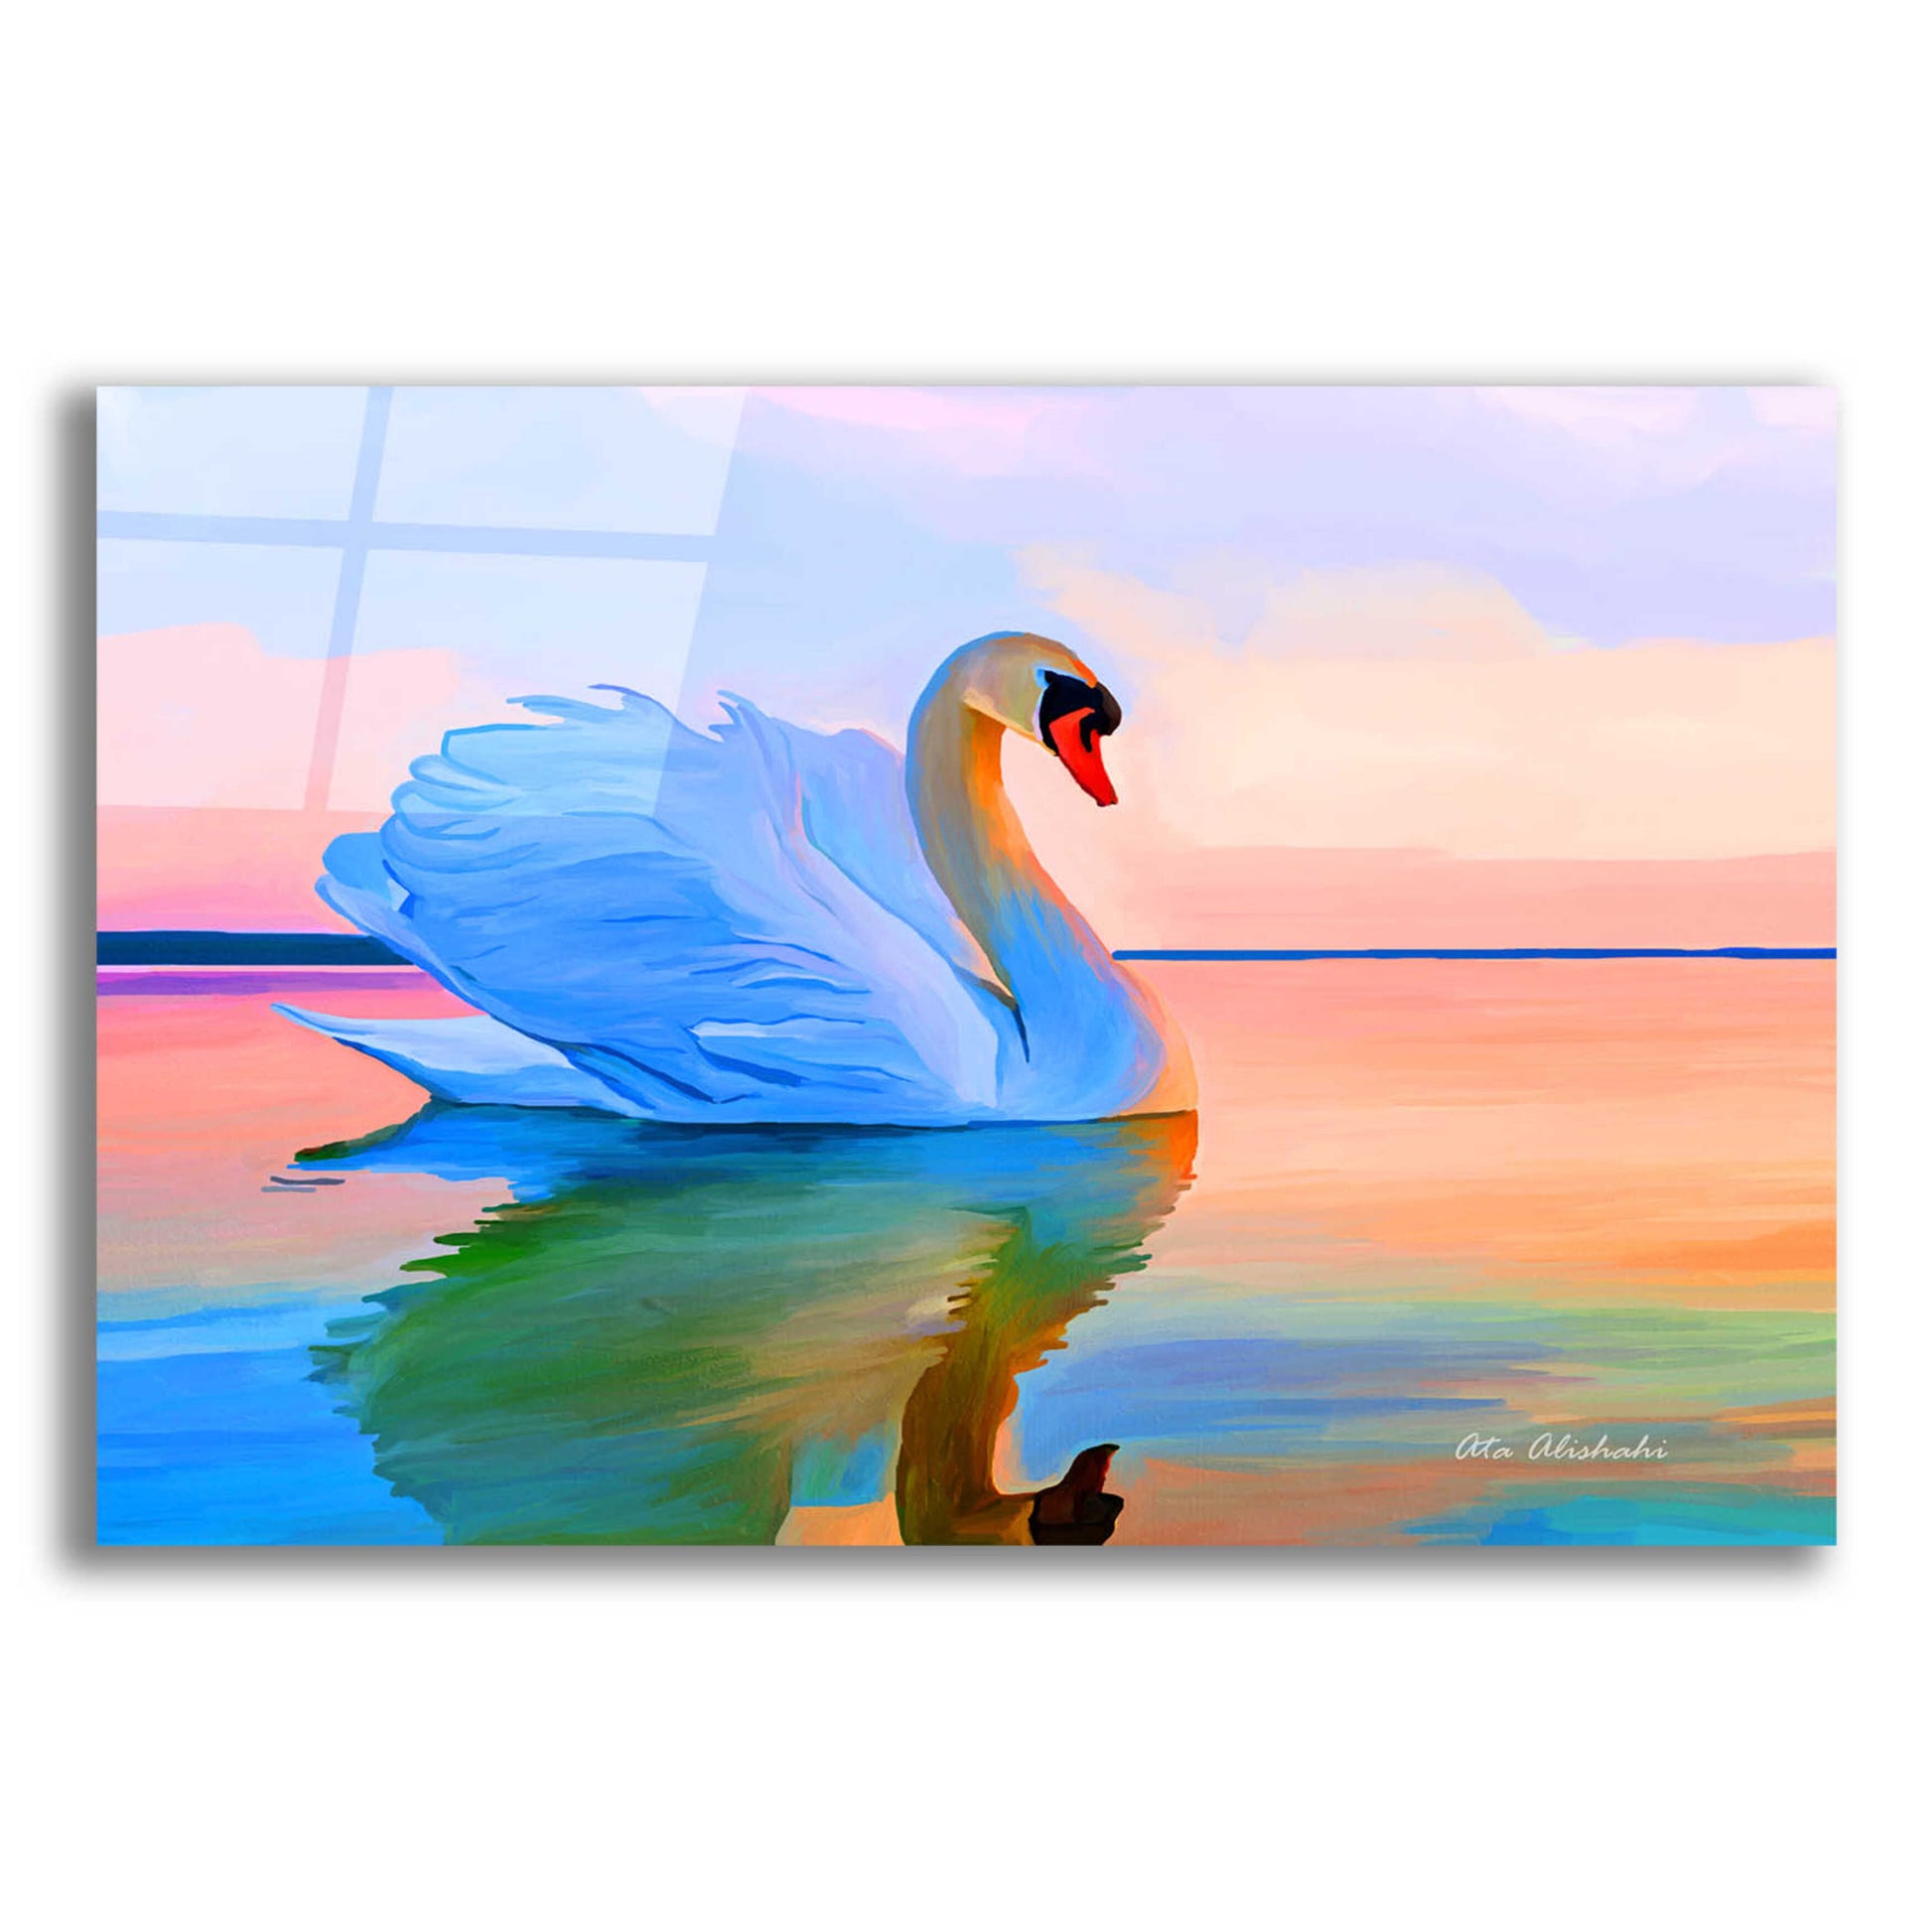 Epic Art 'White Swan' by Ata Alishahi, Acrylic Glass Wall Art,16x12